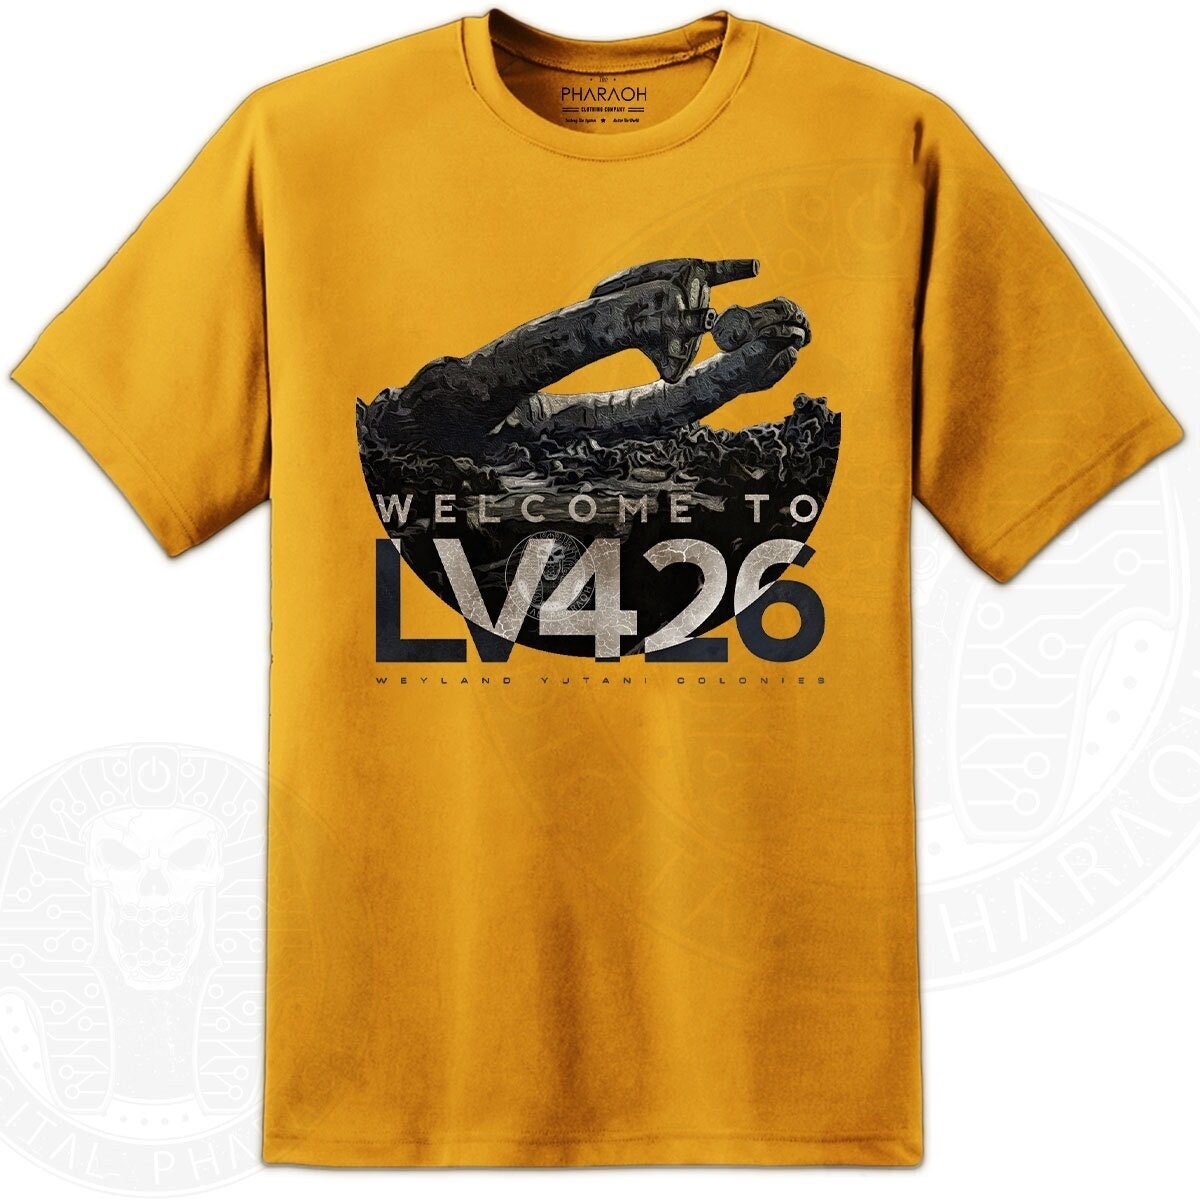 Lv-426 Halloween Alien Aliens Classic T-Shirt College Shirts